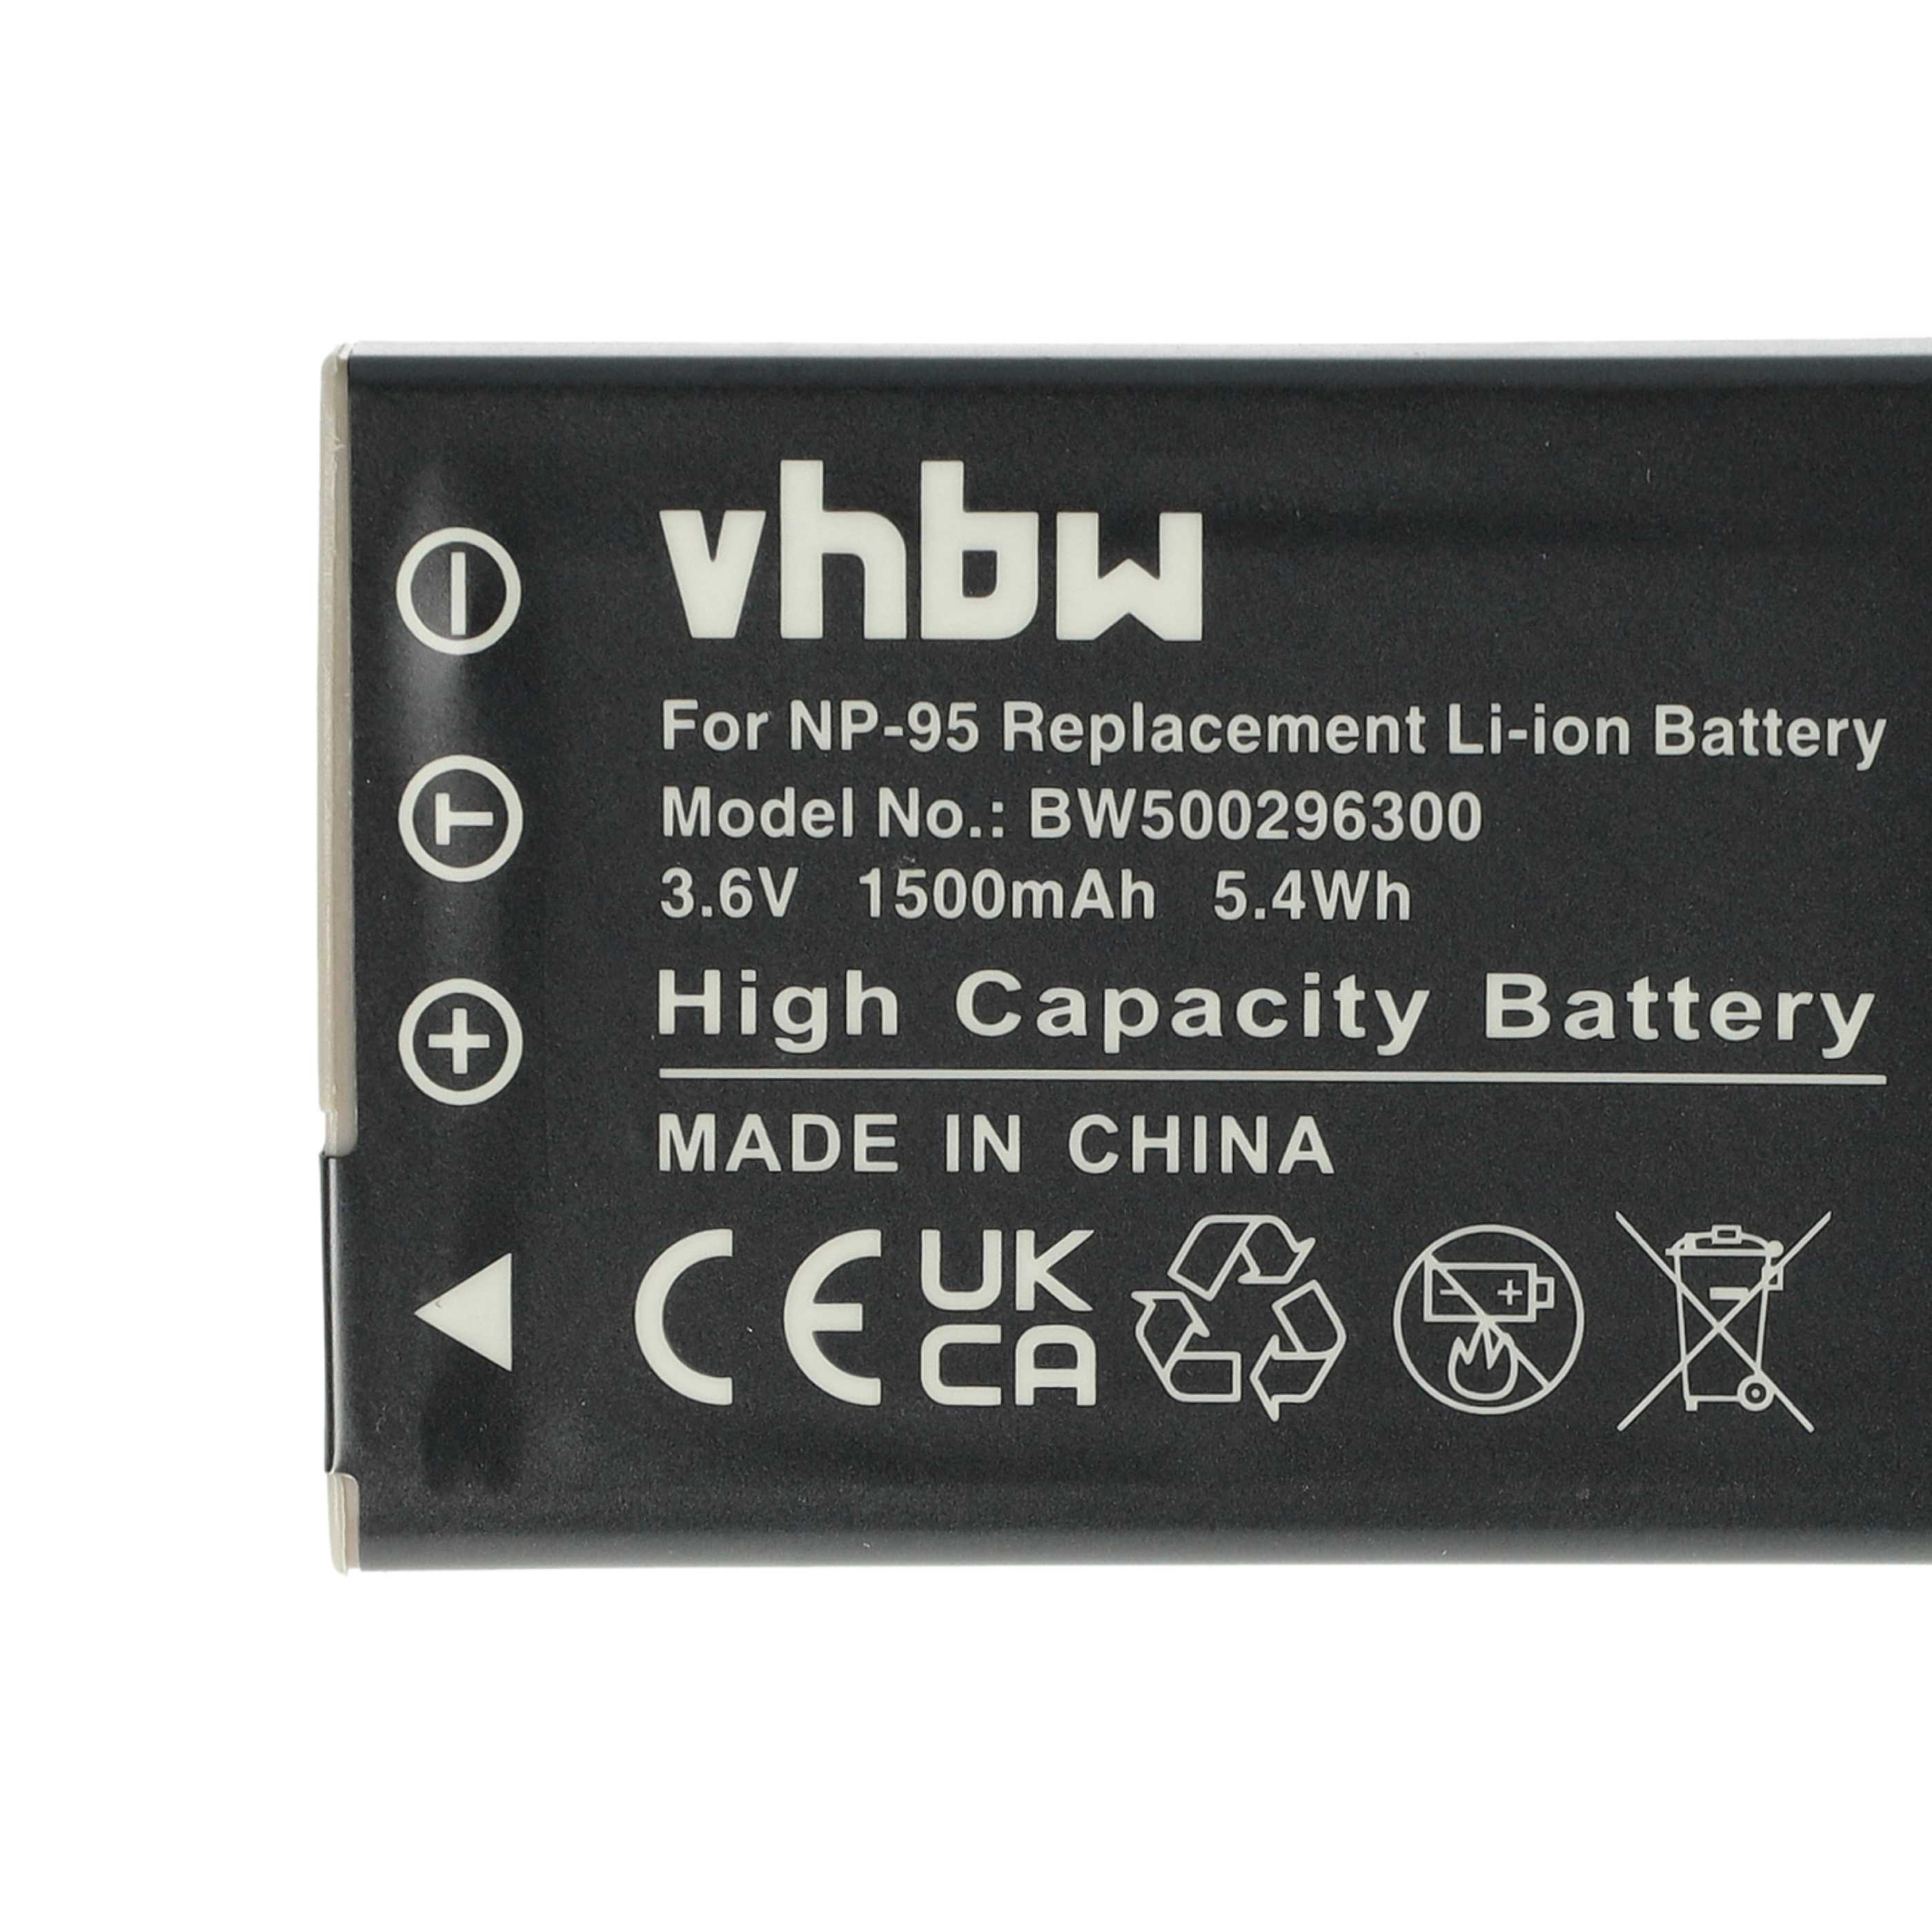 Batteria sostituisce Ricoh DB-90 per fotocamera Ricoh - 1500mAh 3,6V Li-Ion